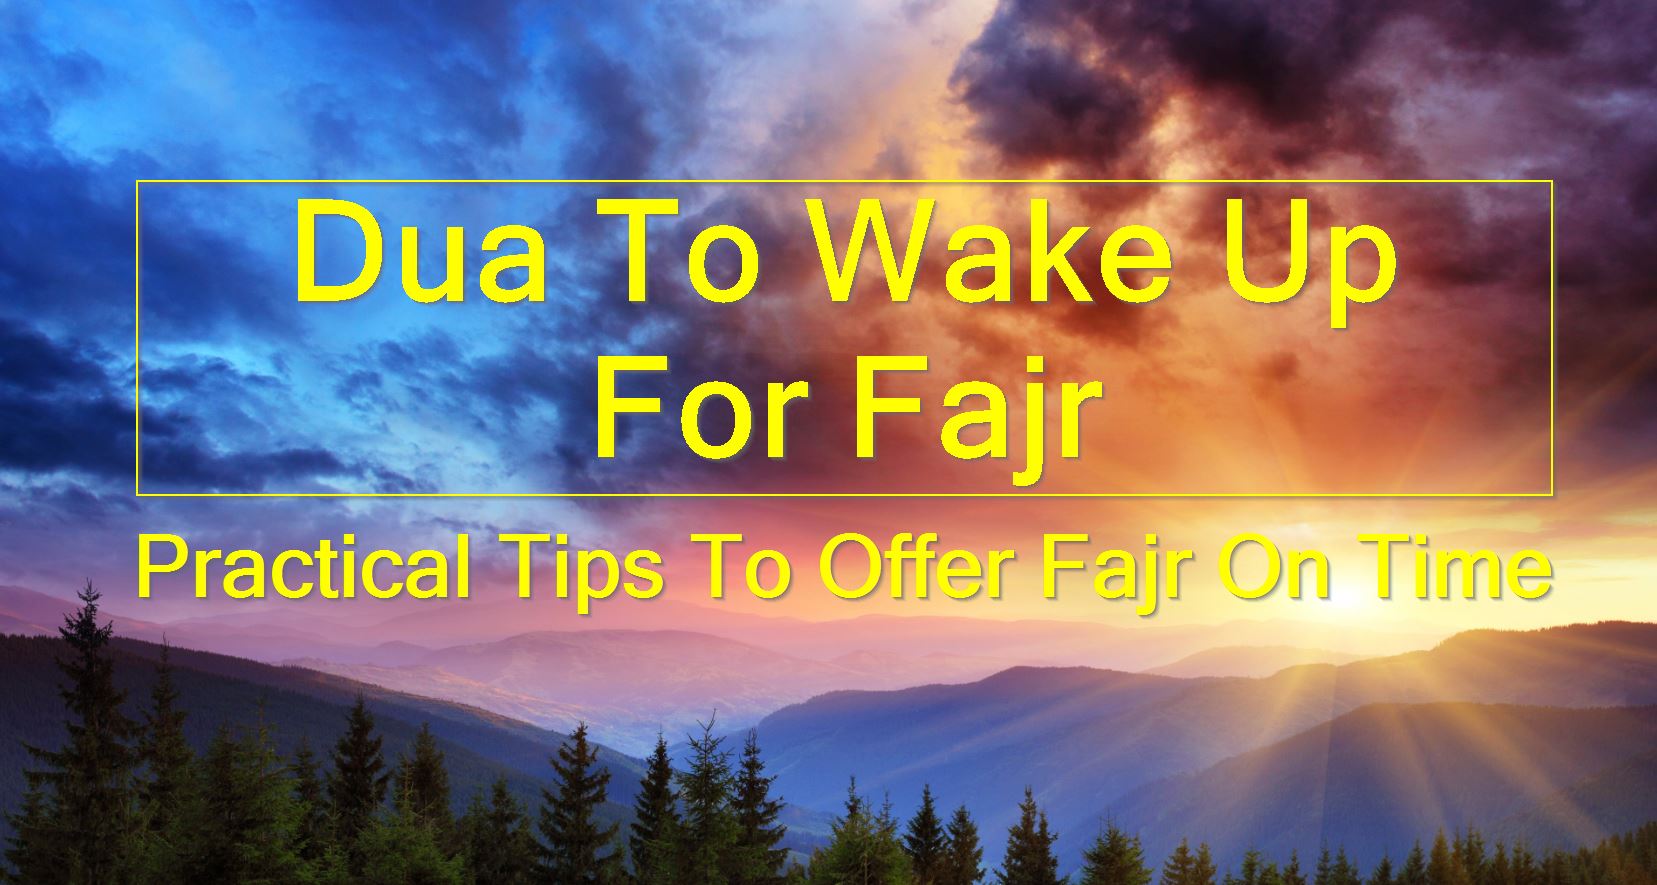 How To Wake Up For Fajr Like Sahaba | Dua, Tips, & Quotes